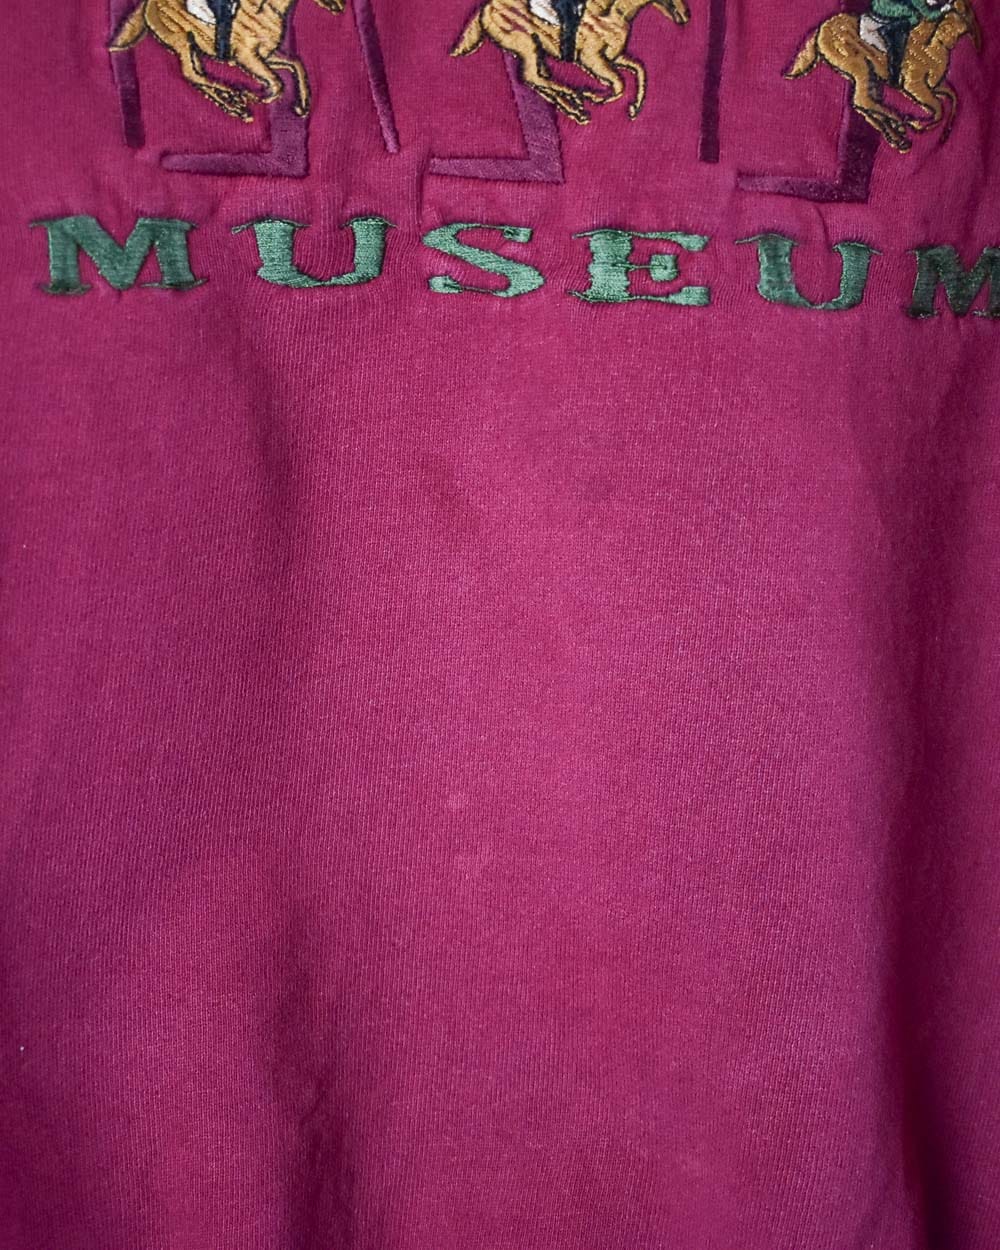 Maroon Denby Museum Sweatshirt - Small